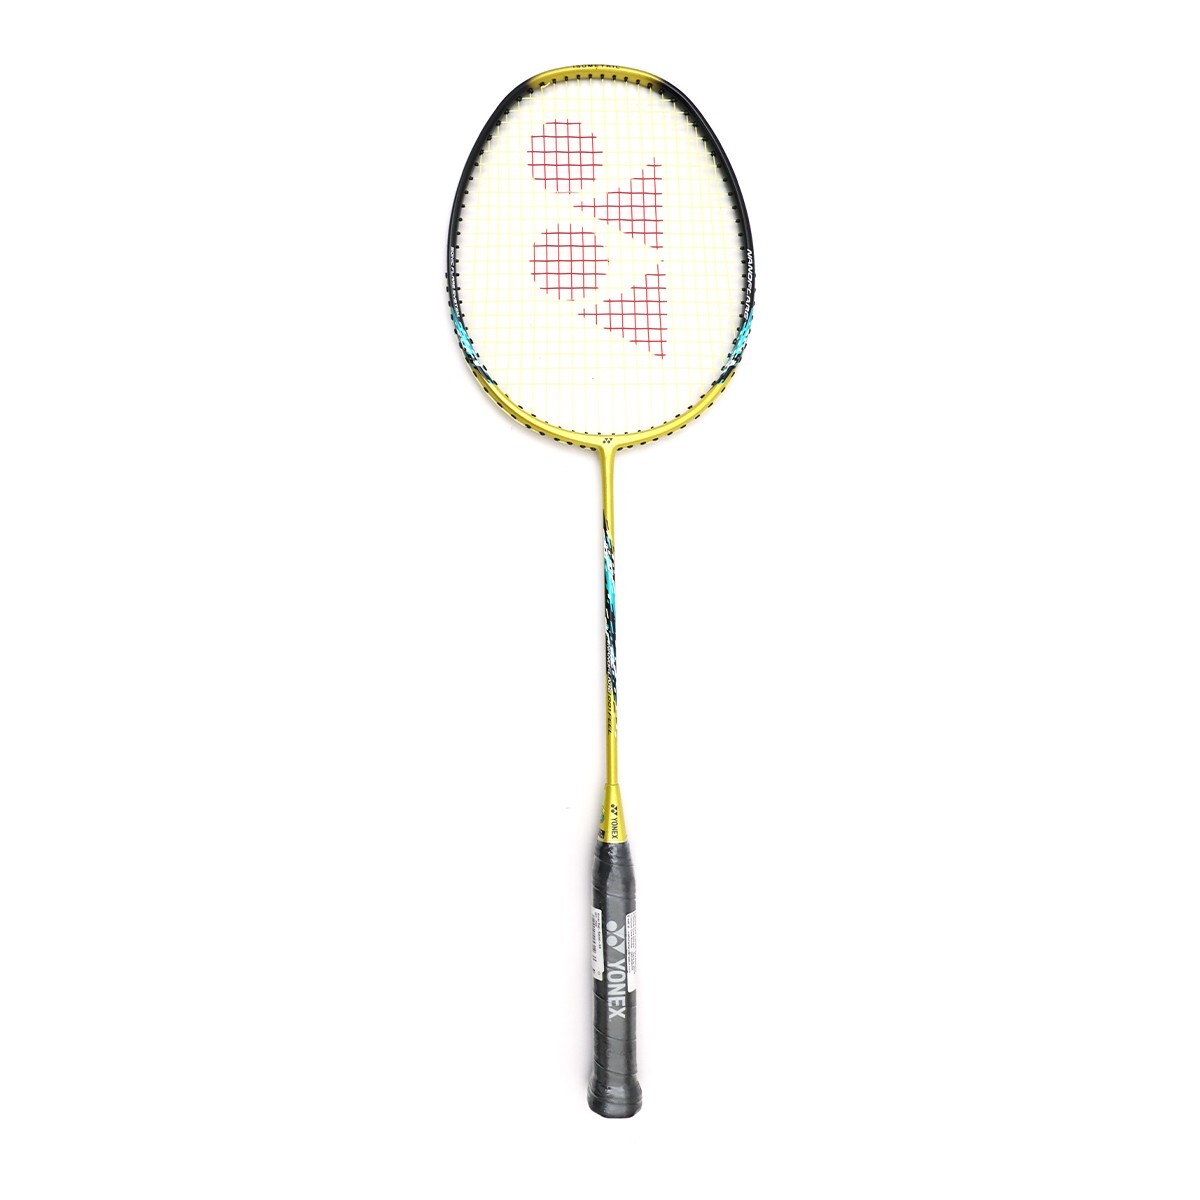 Yonex Badminton Racket-NR 001-Feel